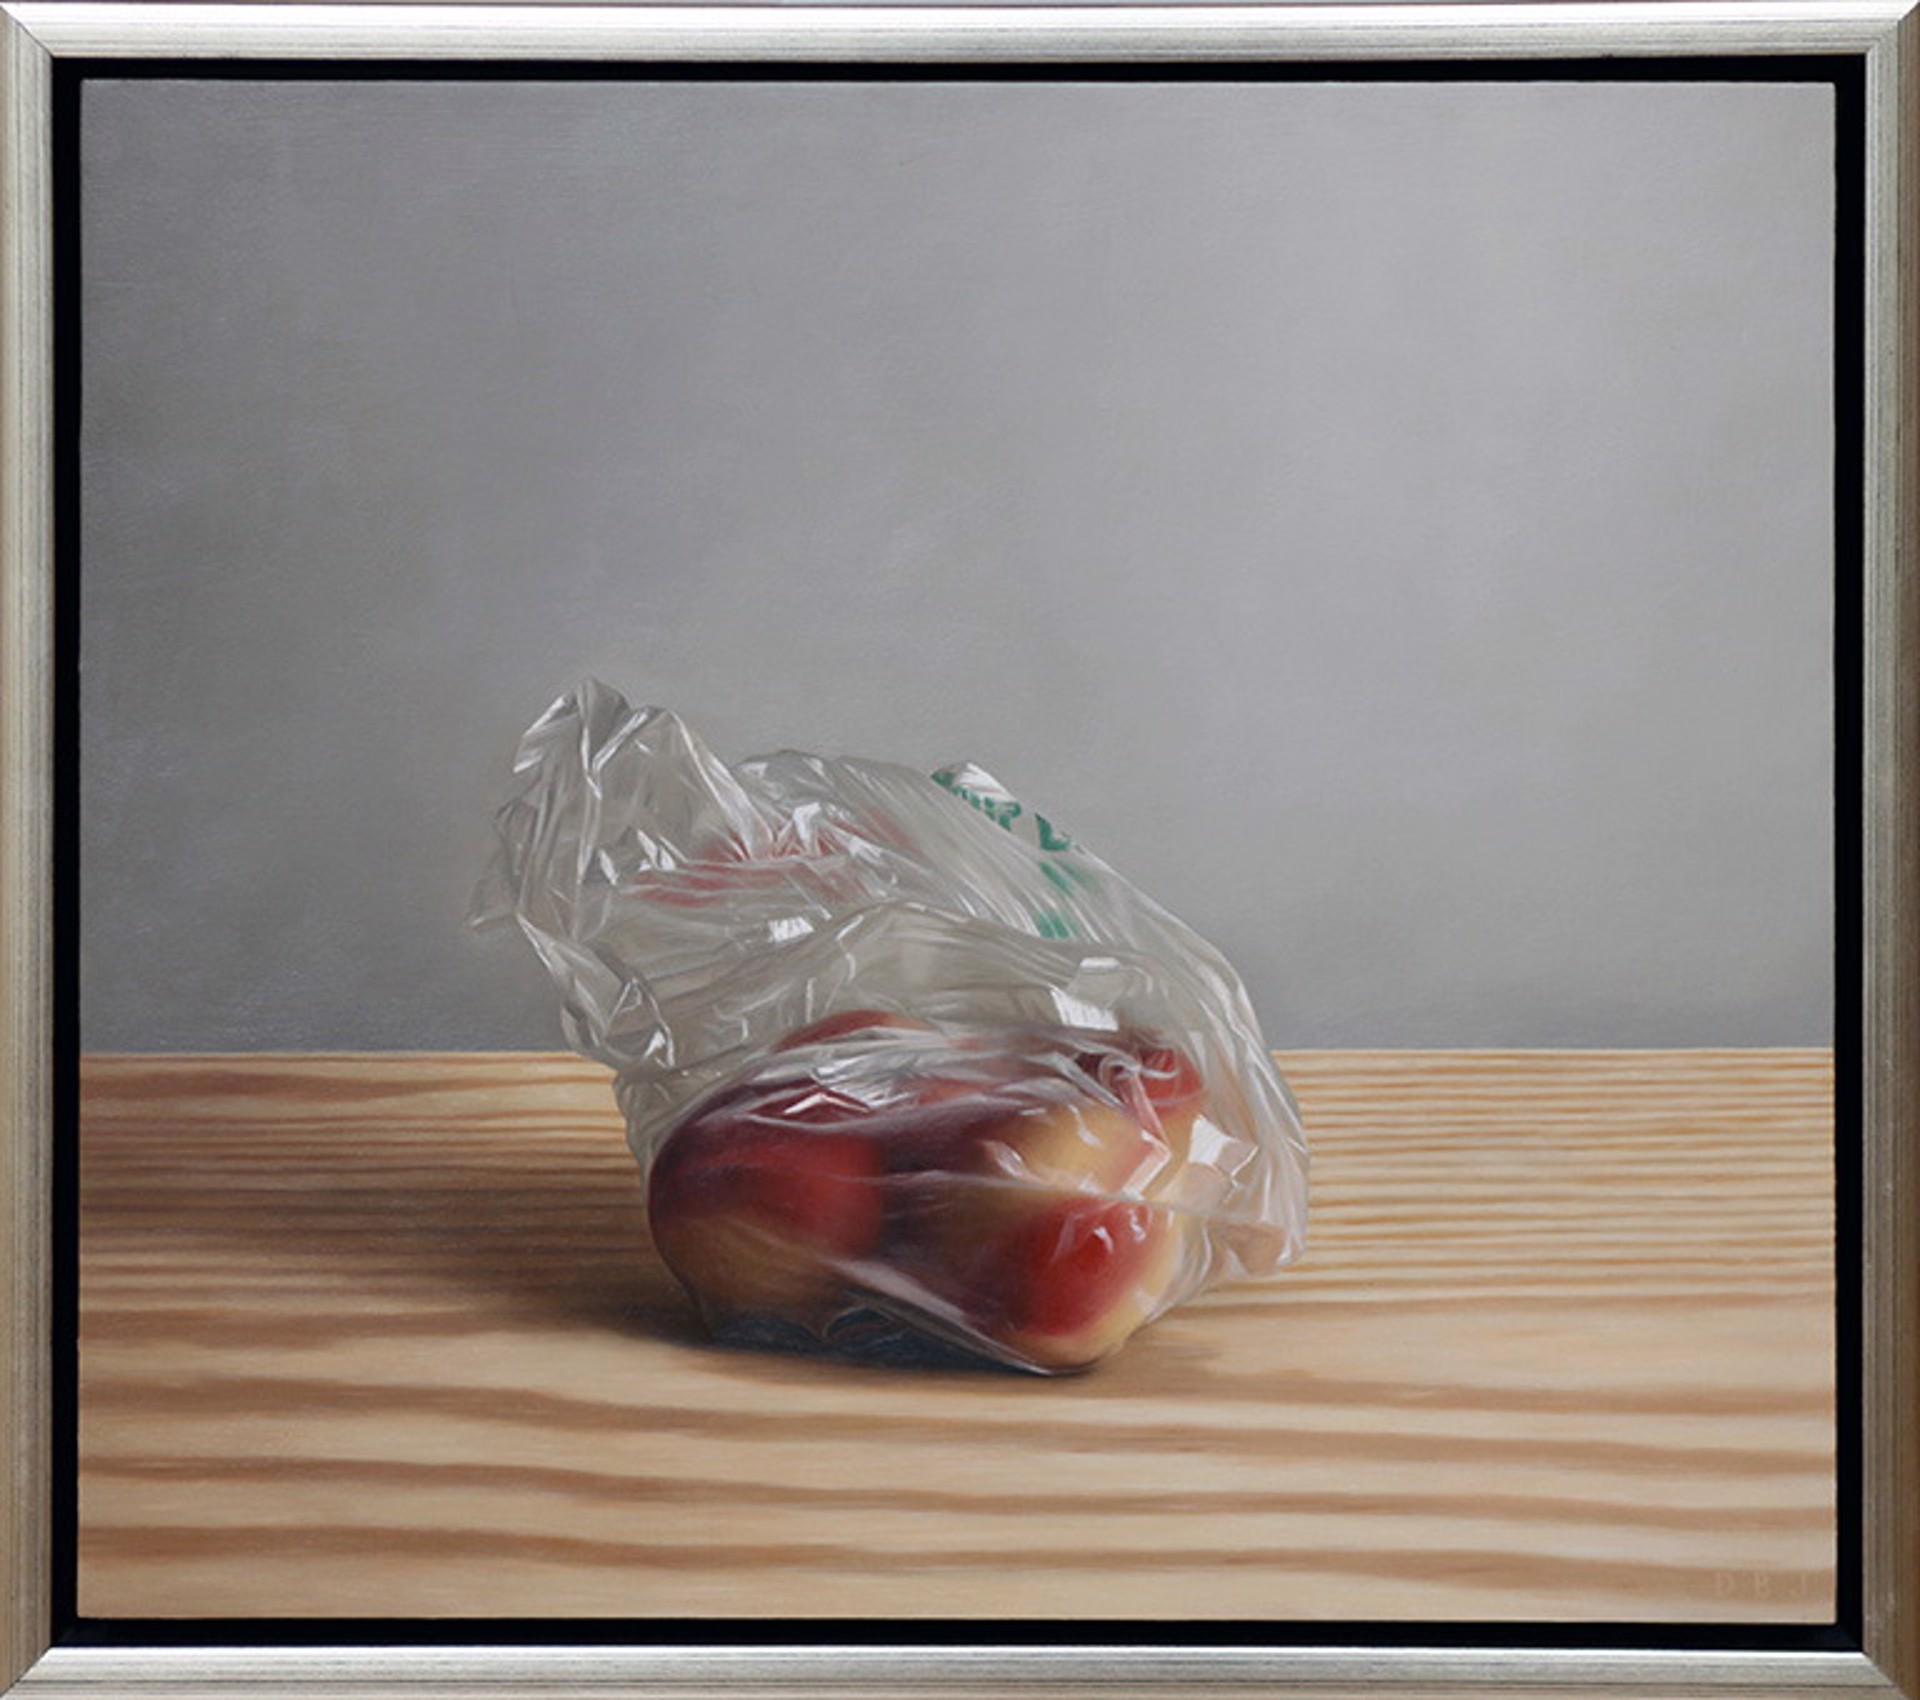 Peach Bag by Dan Jackson